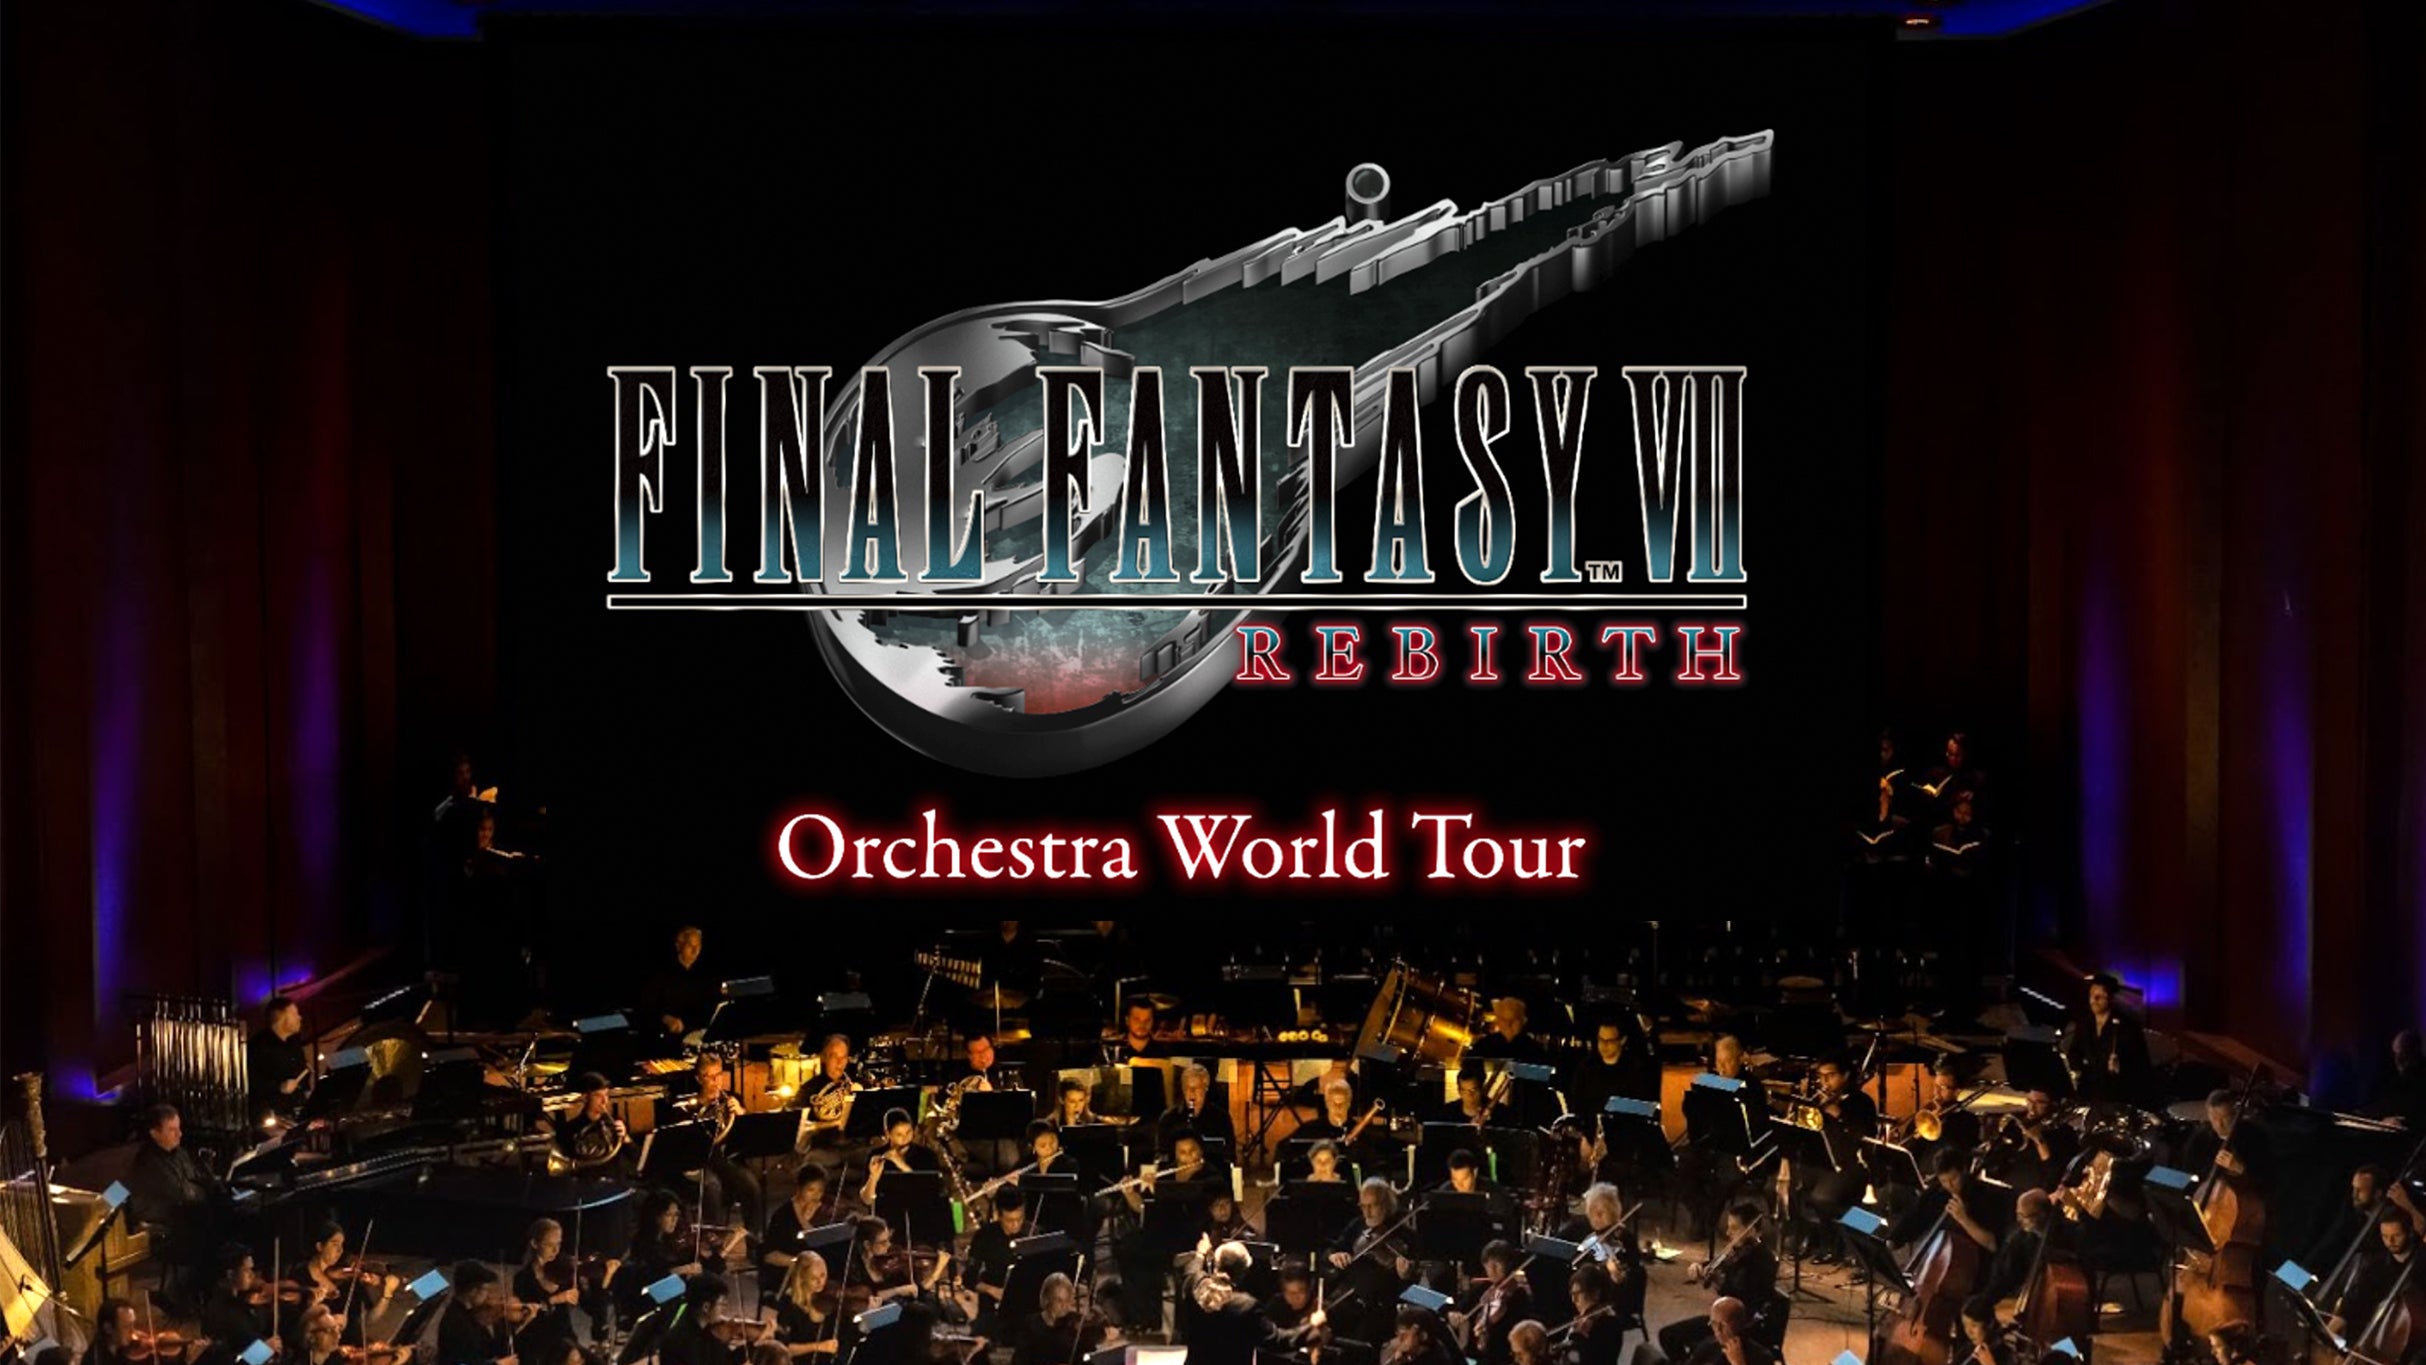 FINAL FANTASY VII REBIRTH Orchestra World Tour presale information on freepresalepasswords.com